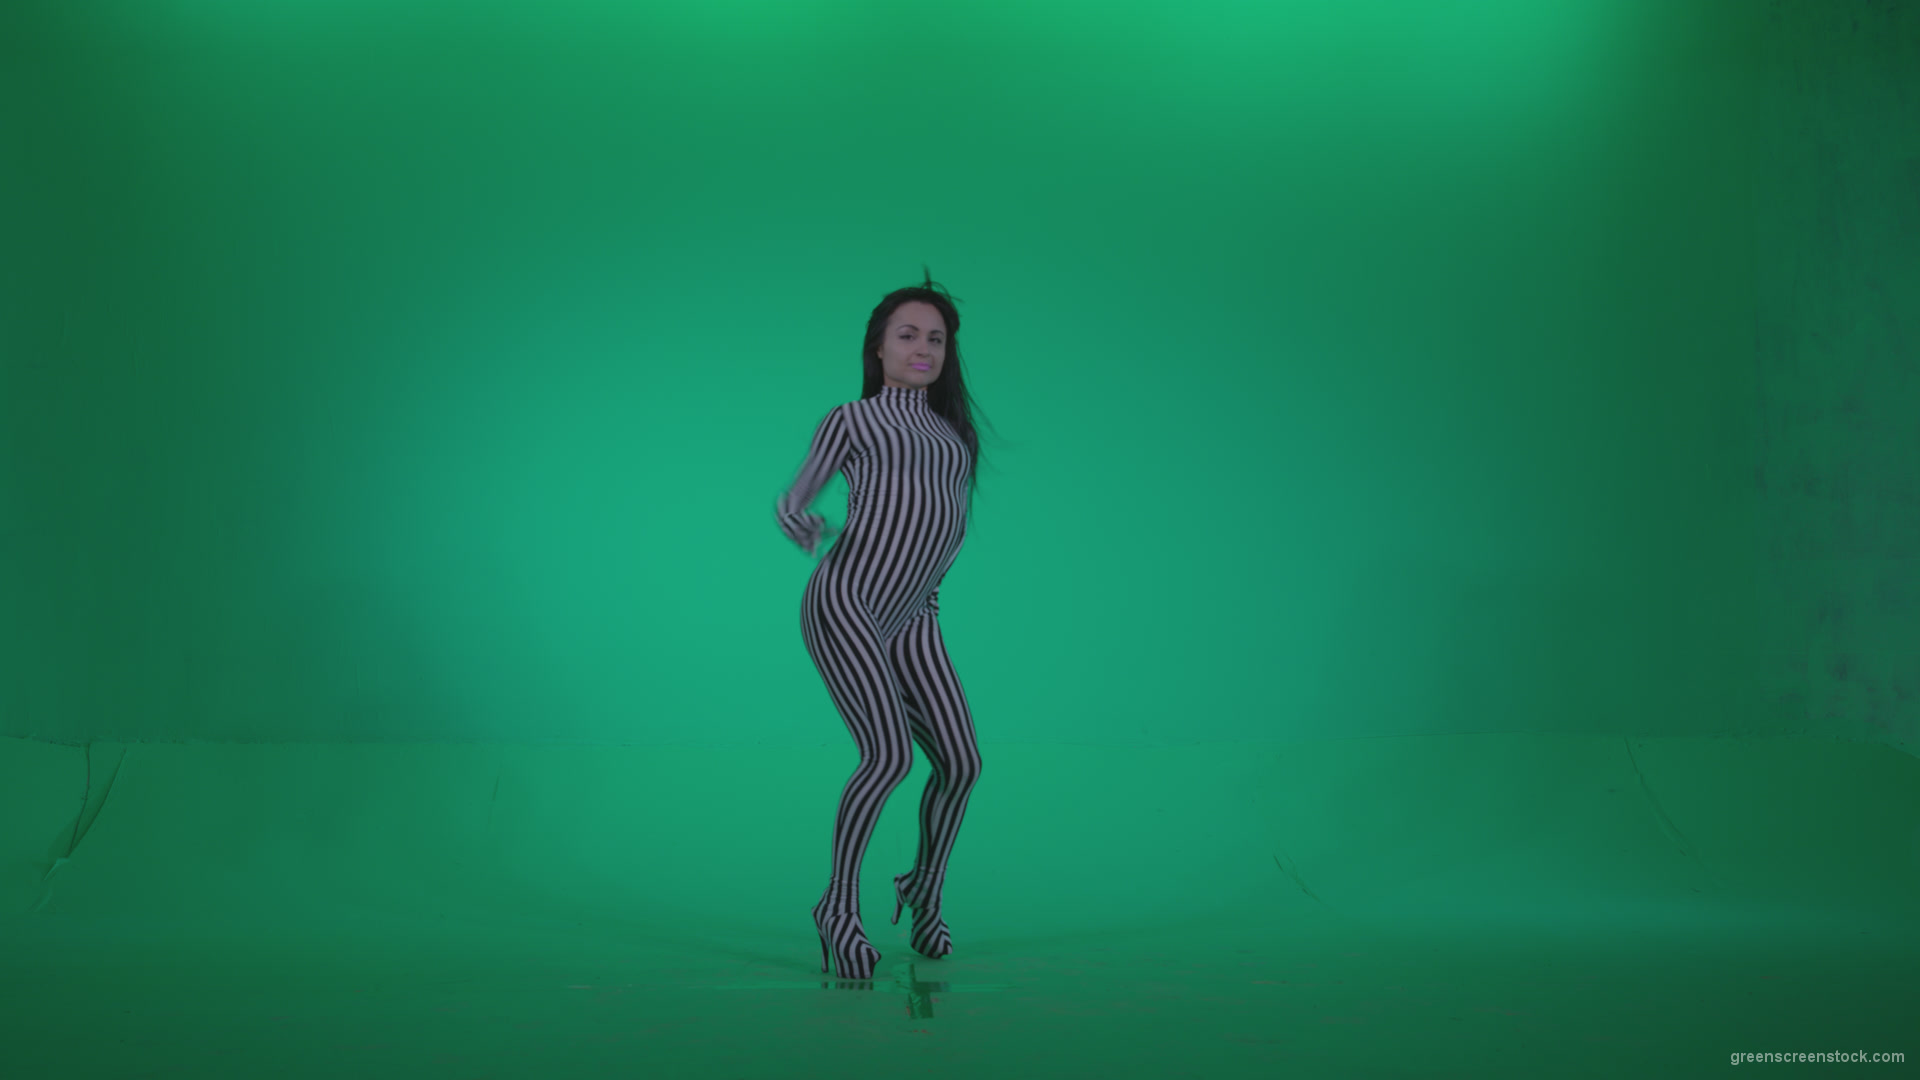 Go-go-Dancer-White-Stripes-s4-Green-Screen-Video-Footage_009 Green Screen Stock